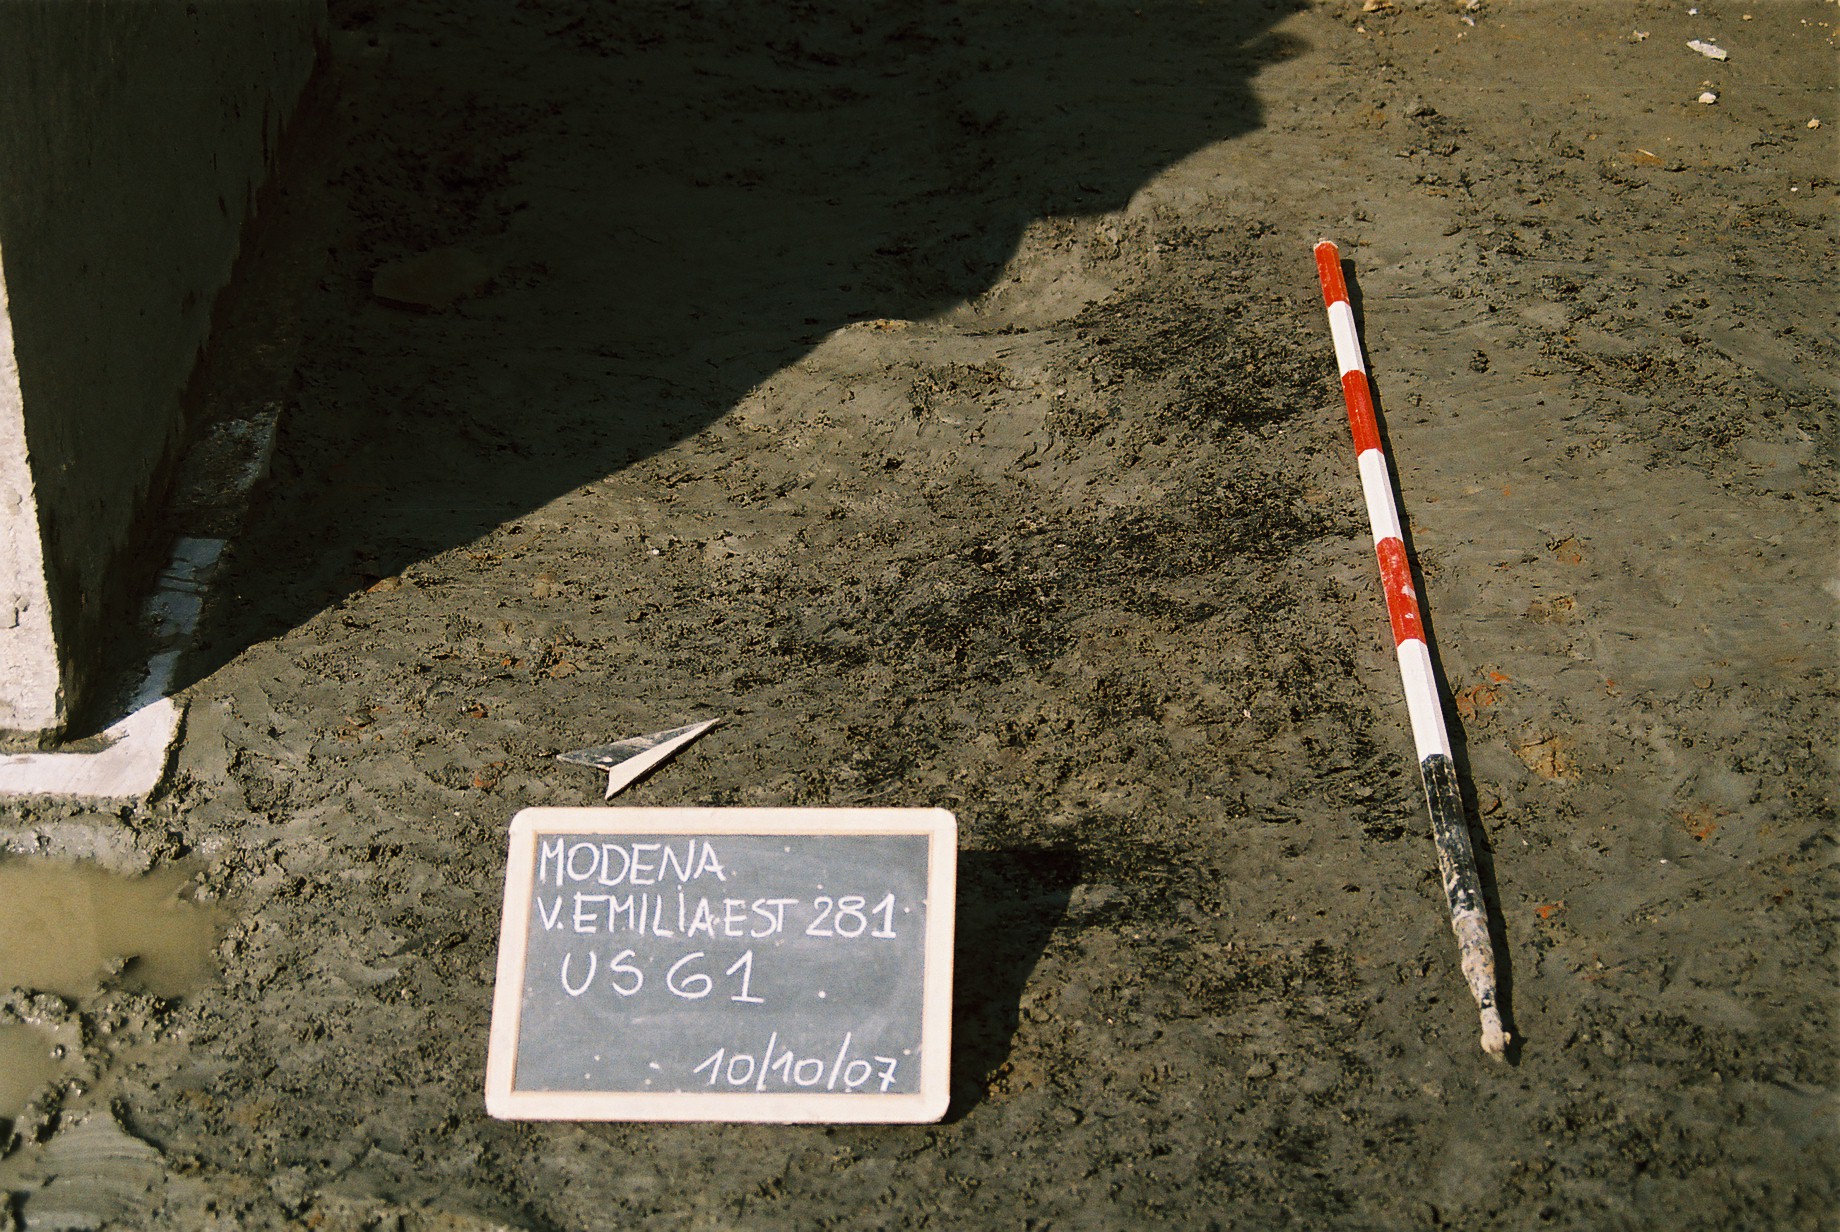 Via Emilia Est 281, lo scavo archeologico